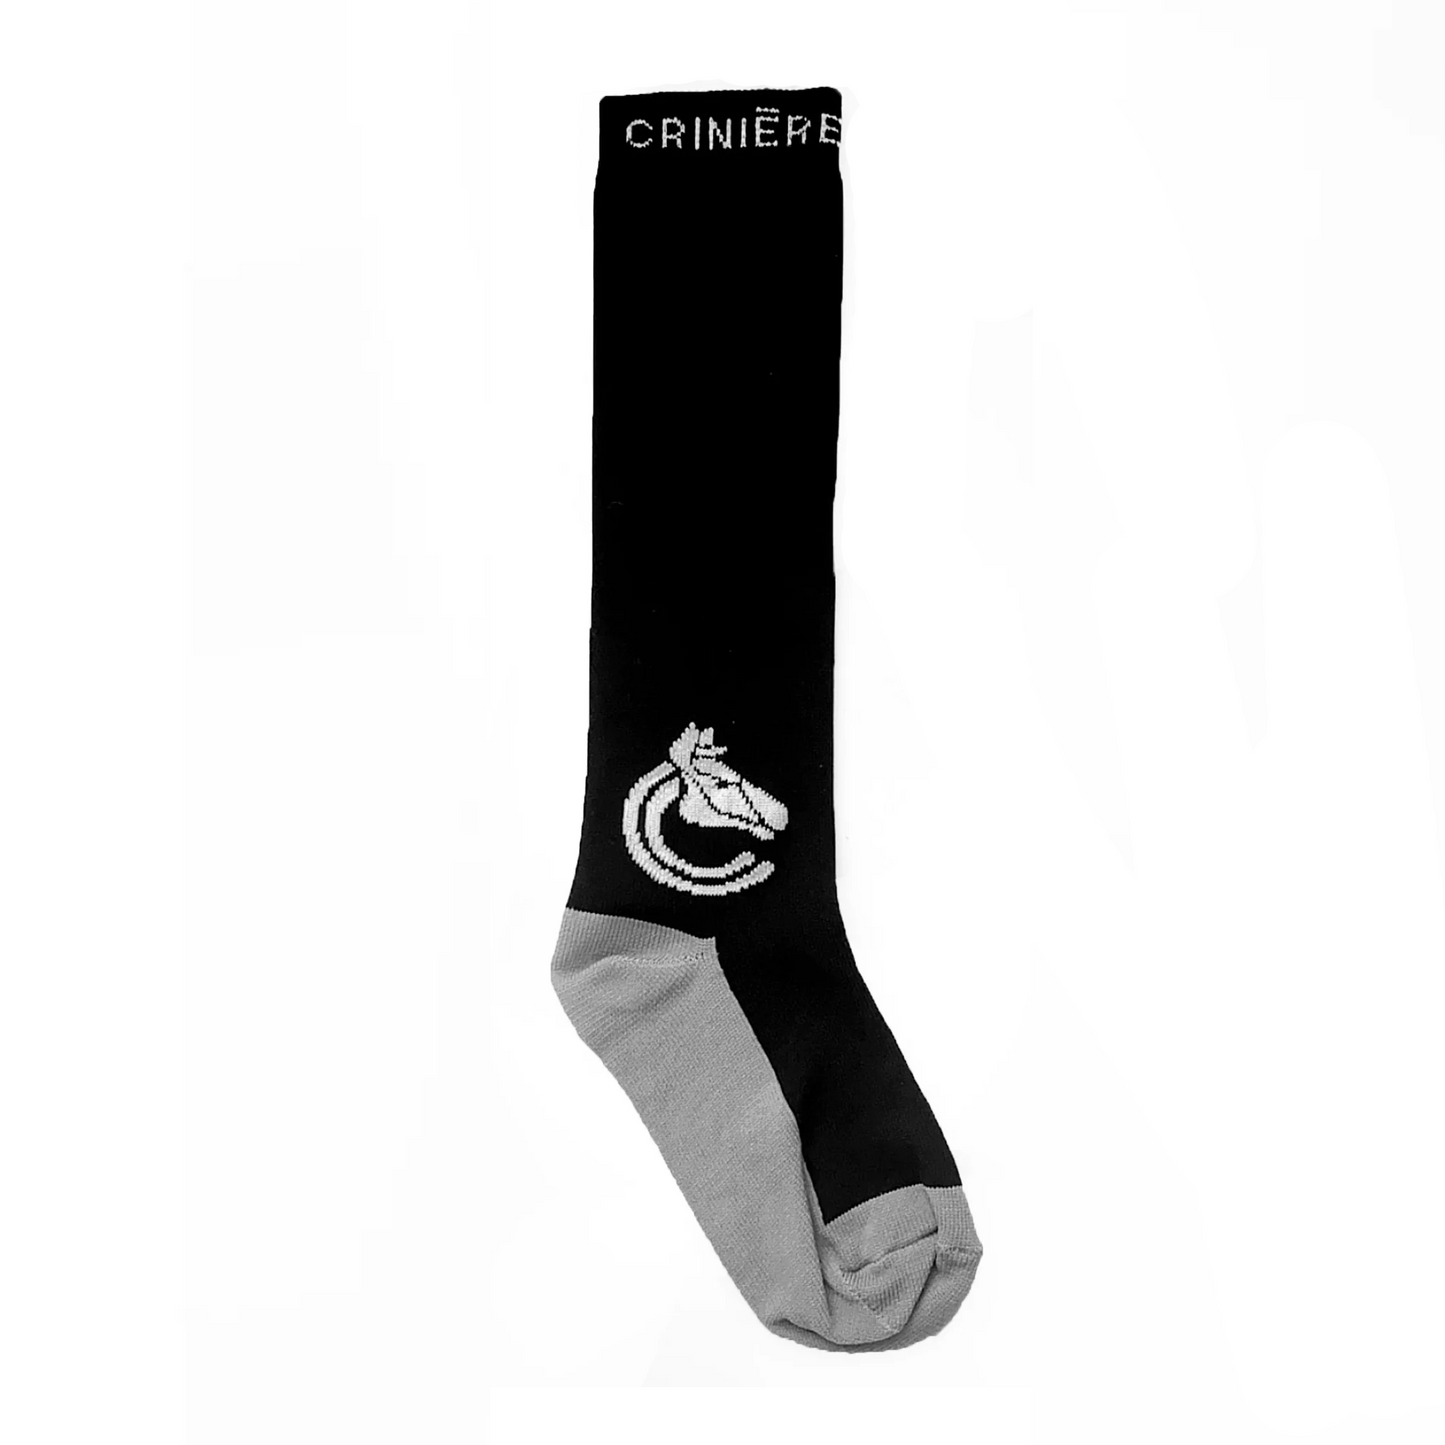 Criniere Socks